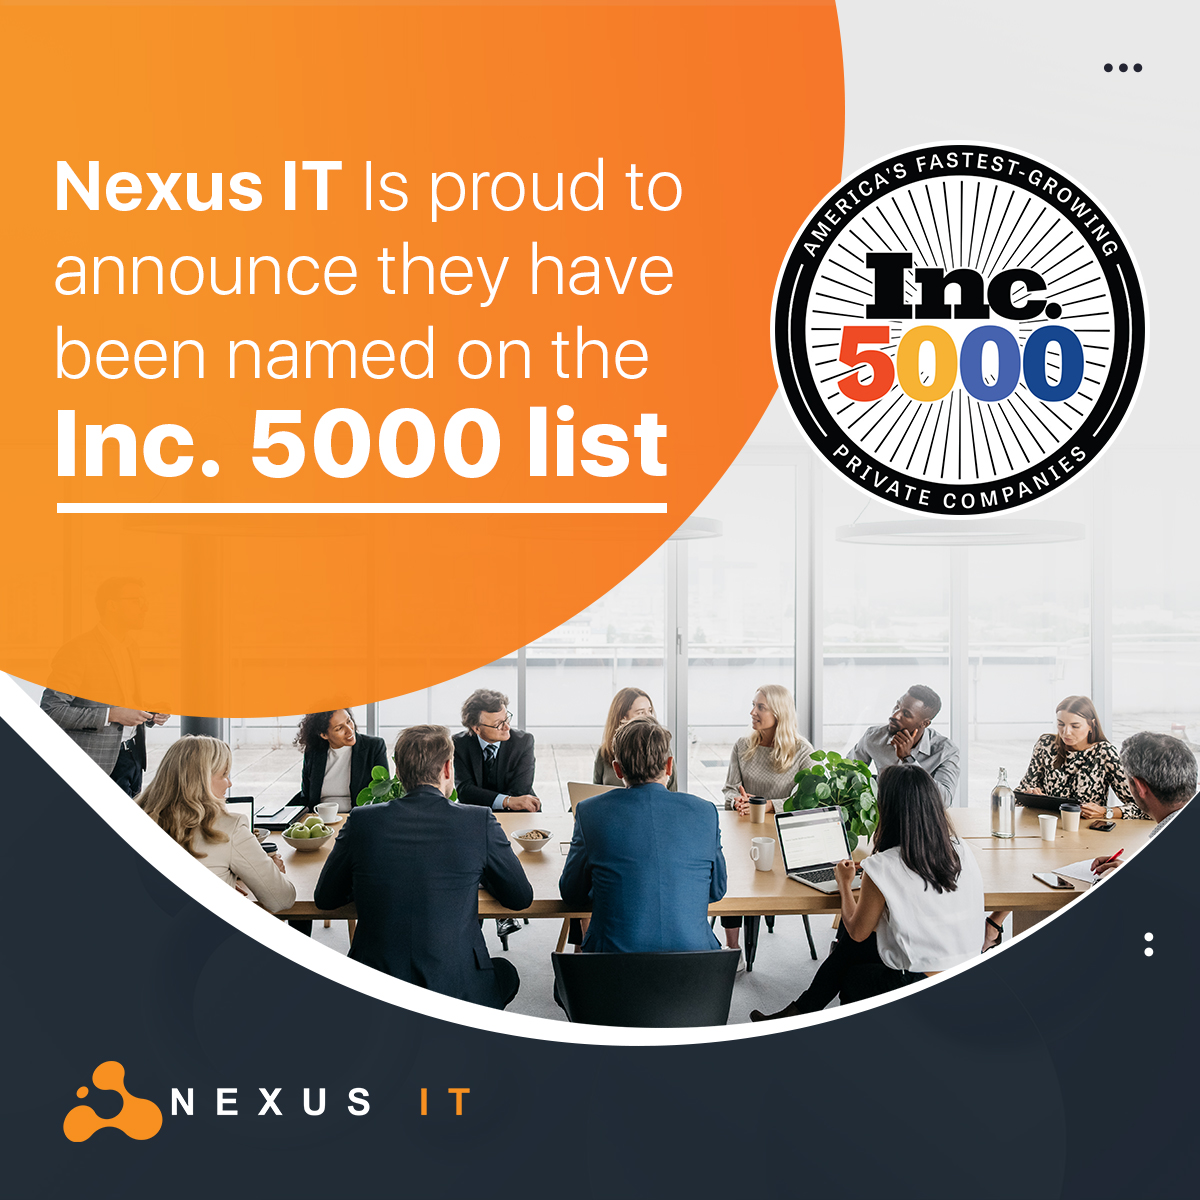 2022 08 16 NexusIT - INC. 5000 (01)